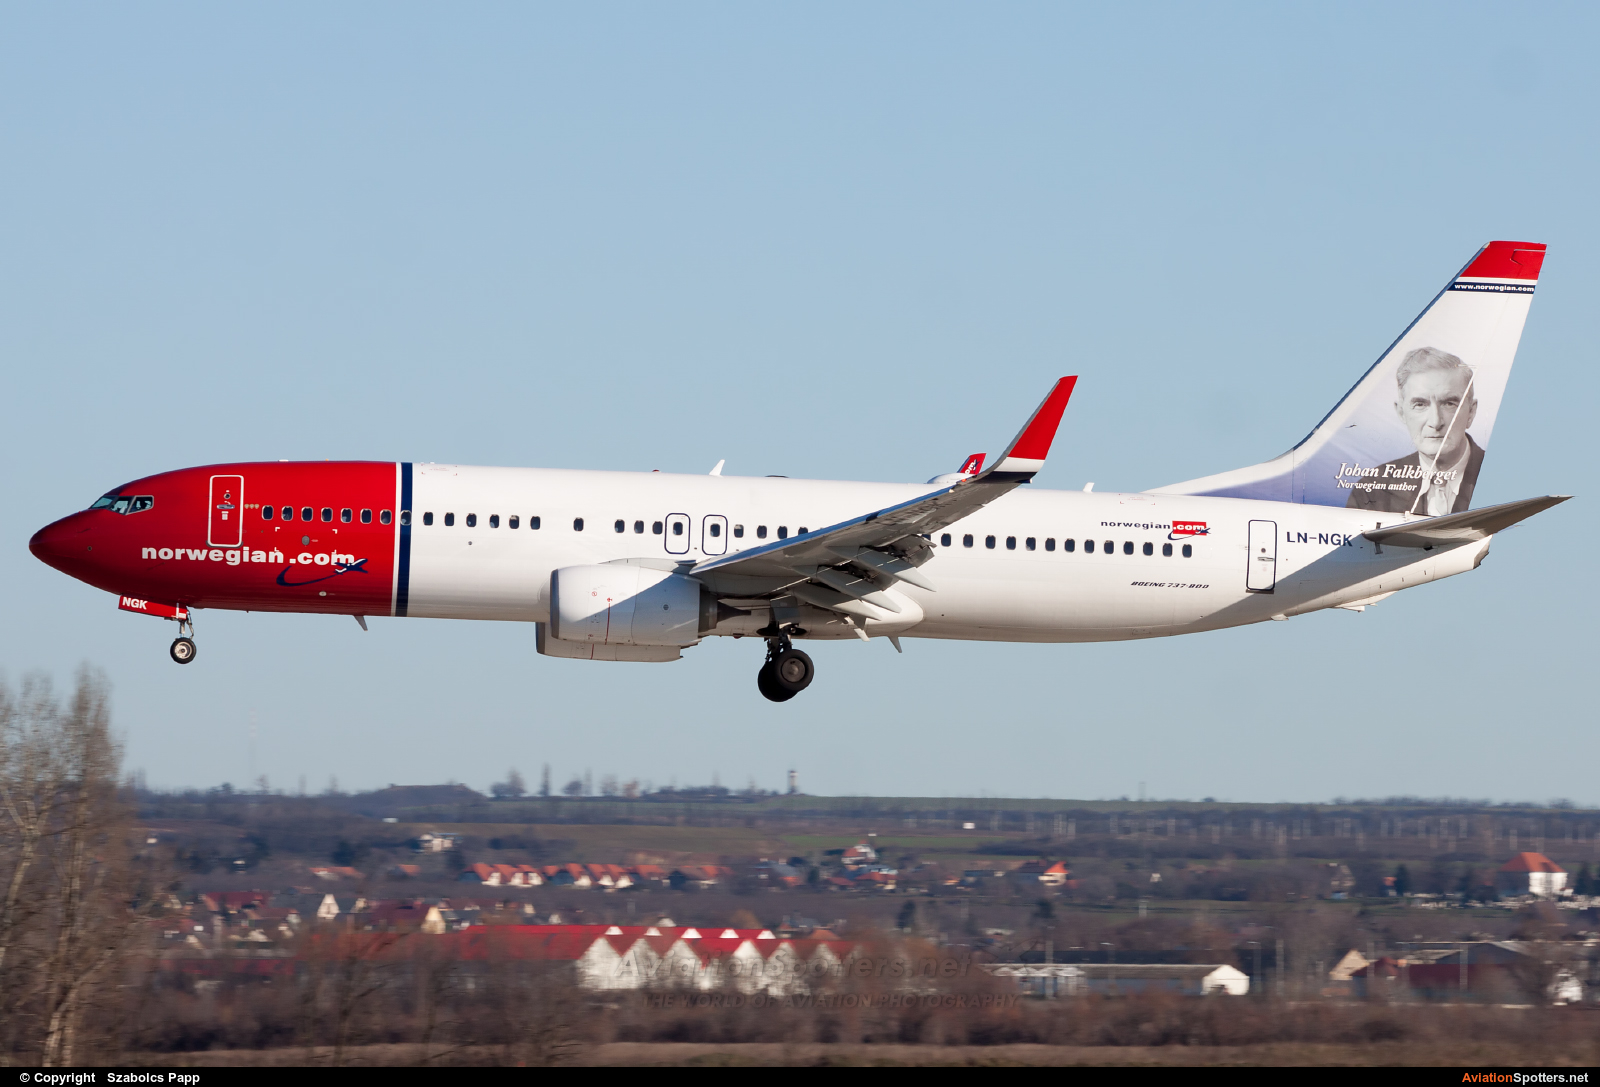 Norwegian Air Shuttle  -  737-800  (LN-NGK) By Szabolcs Papp (mr.szabi)